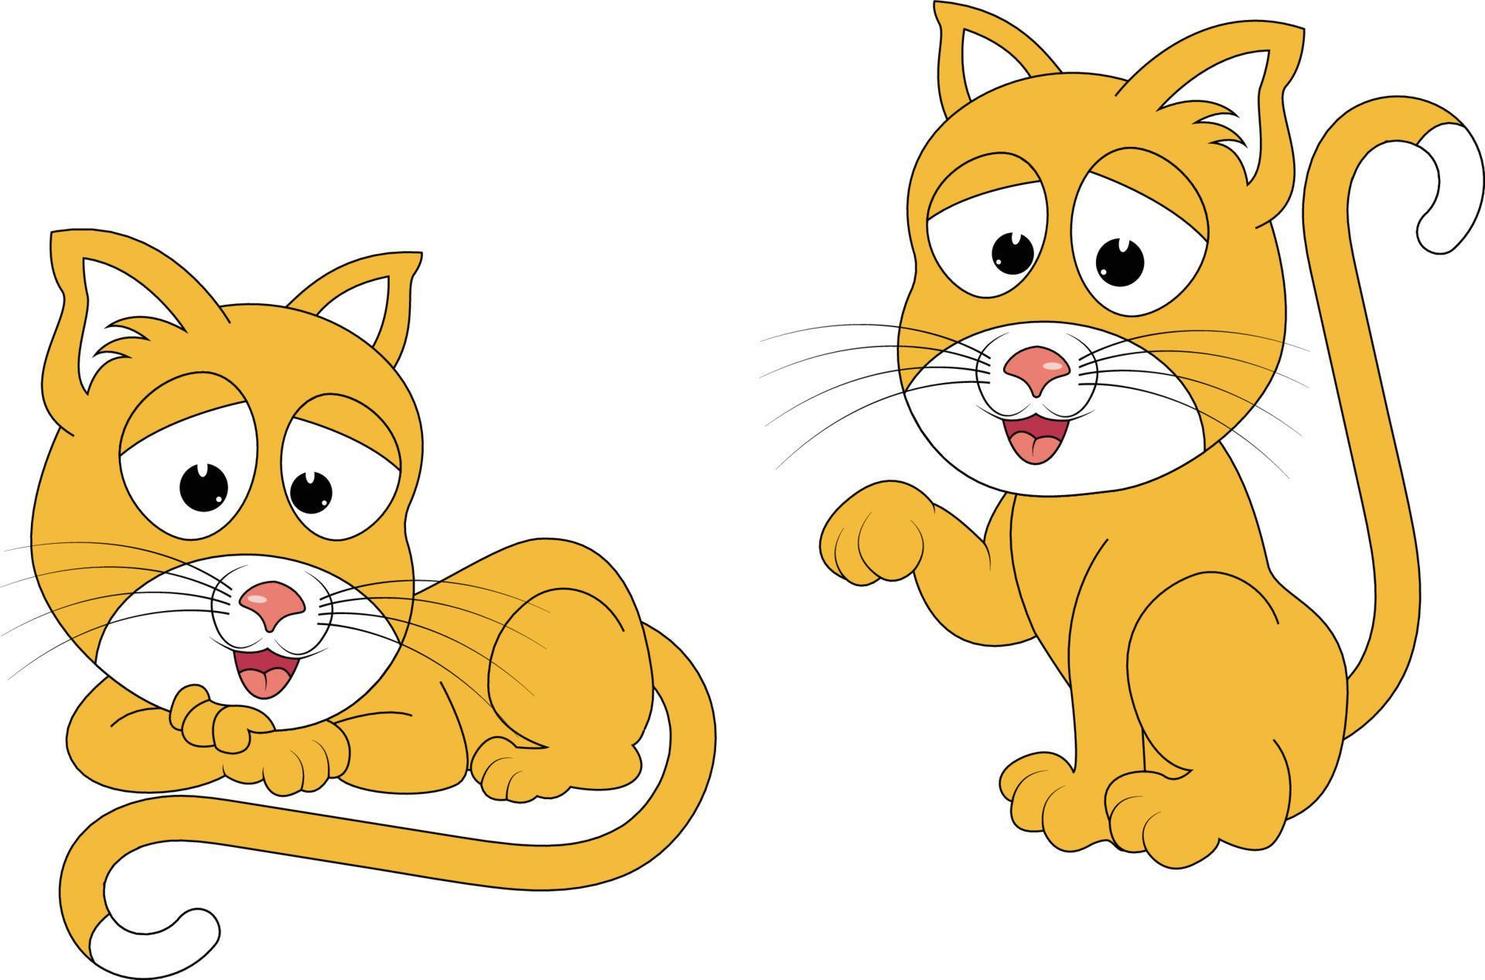 mignon chat mignon animal dessin vectoriel graphiqueanimal dessin animé vecteur graphique